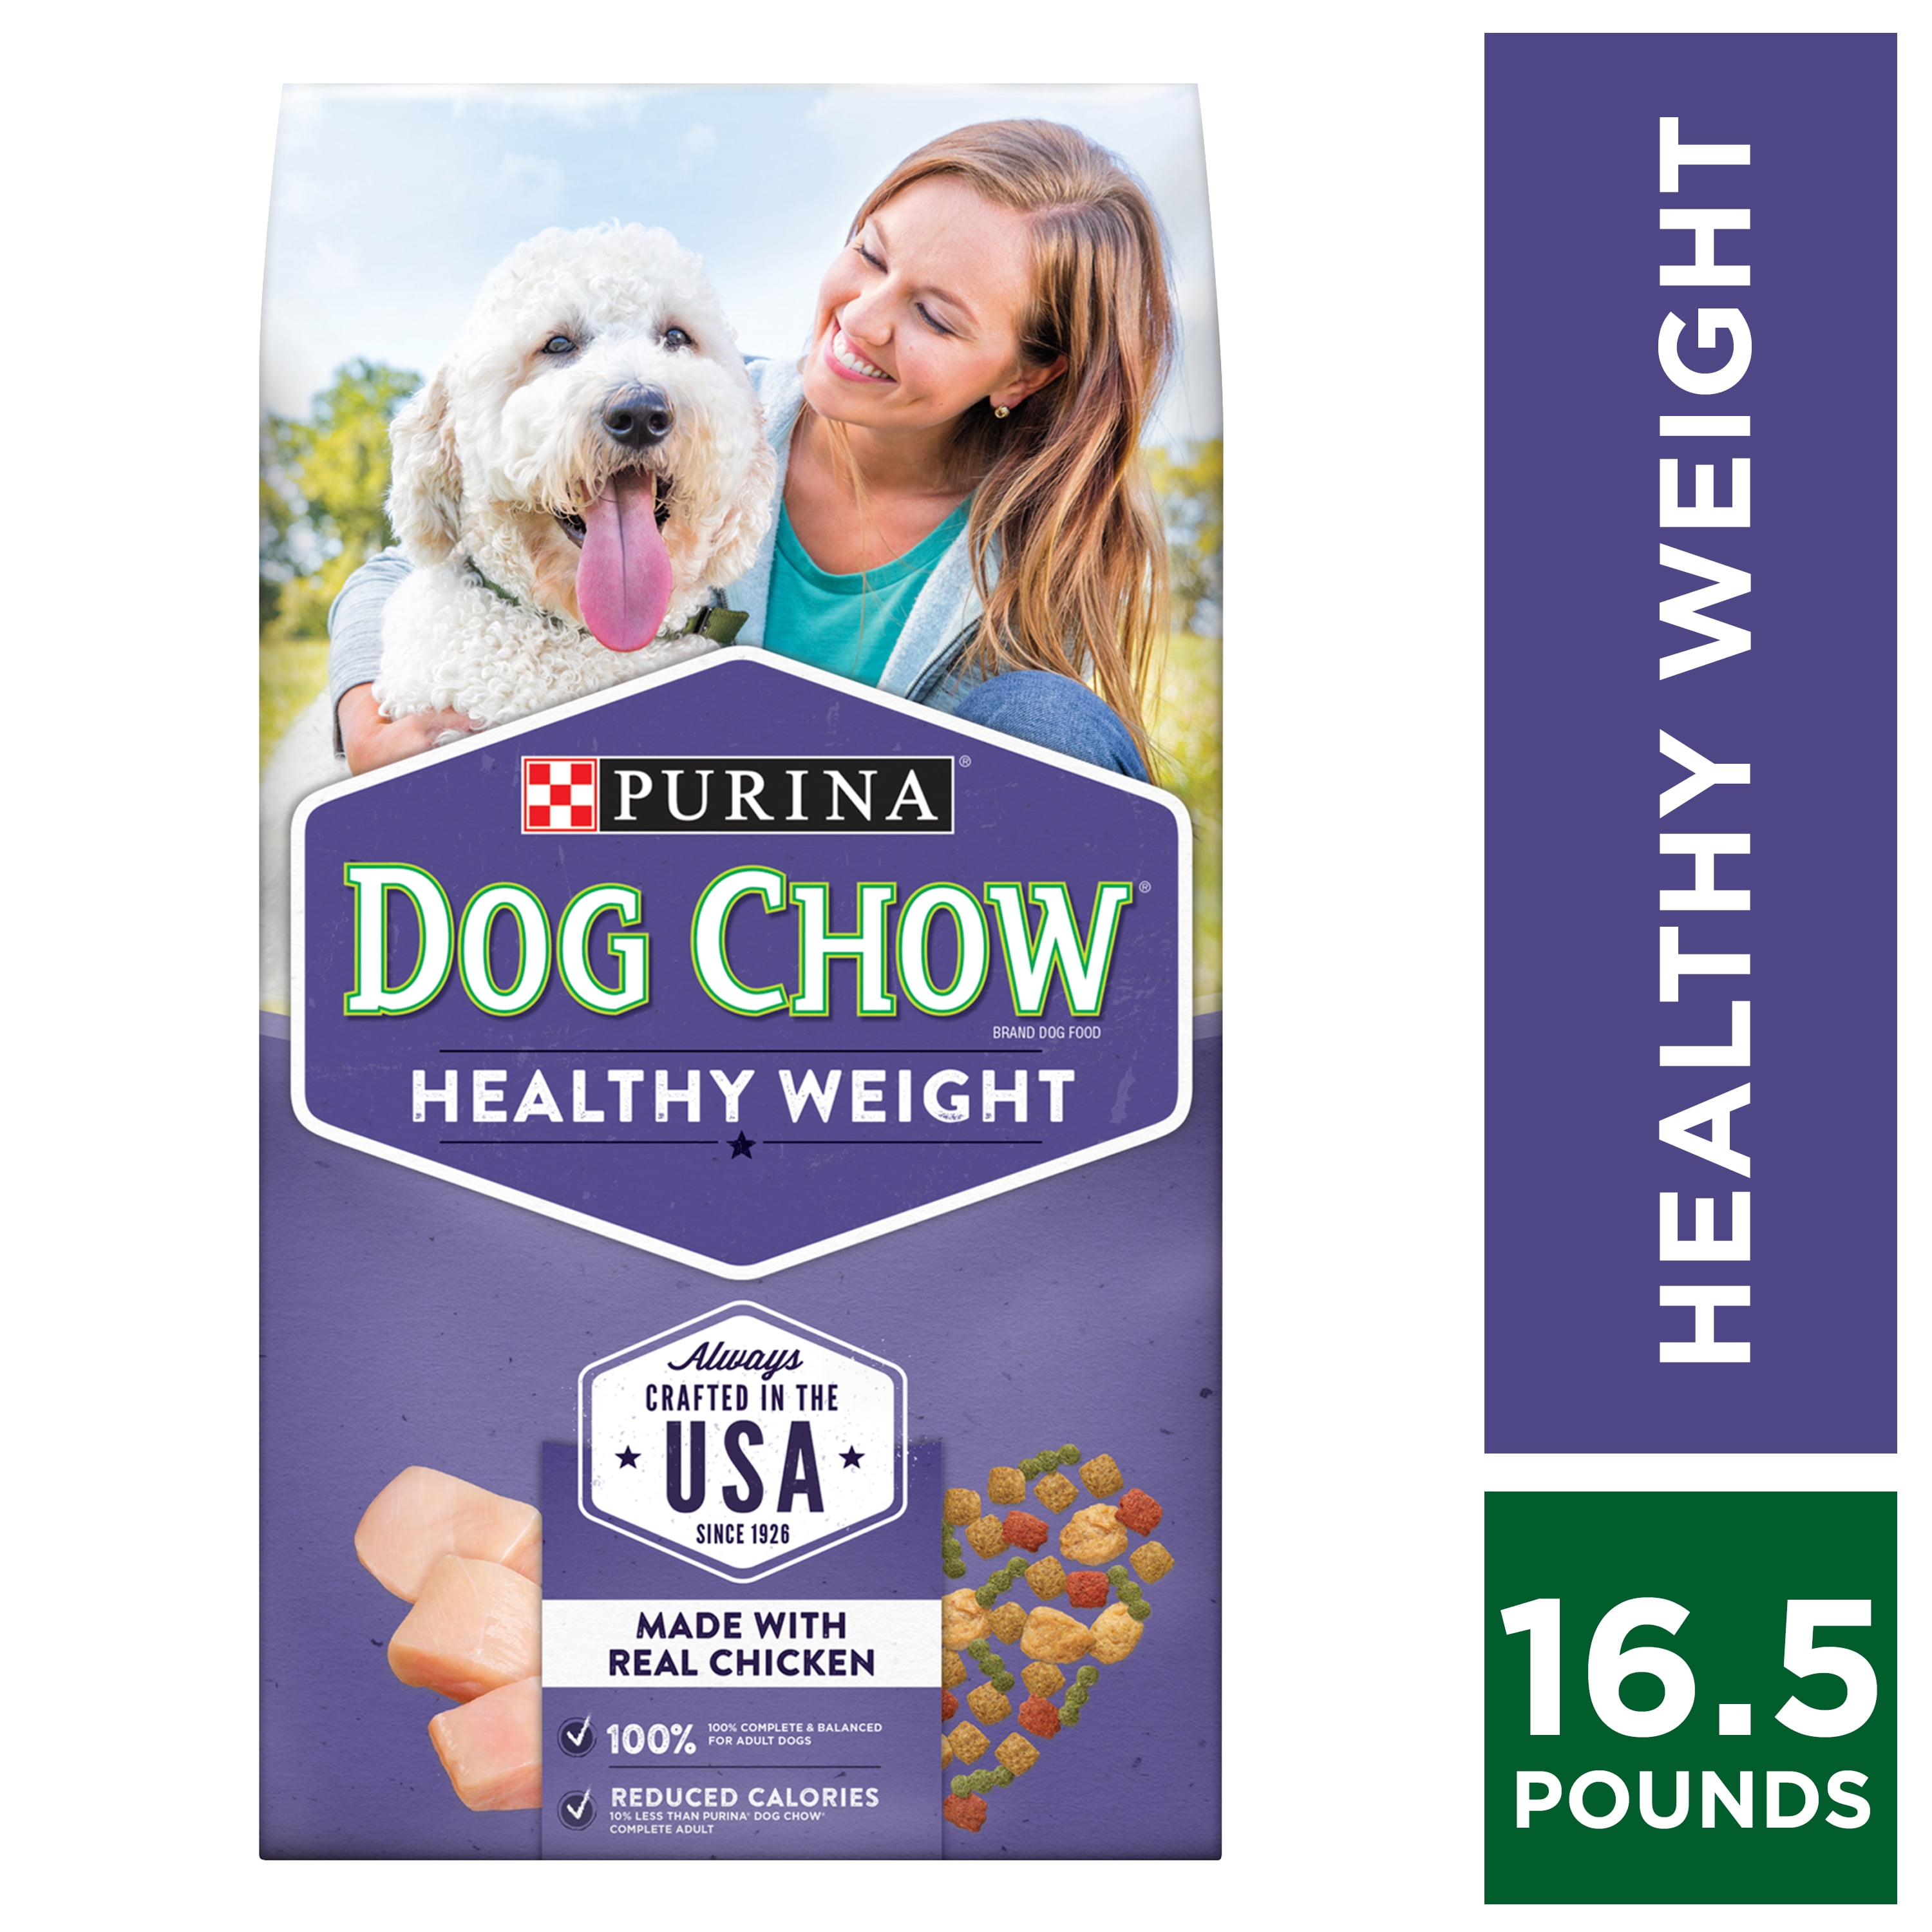 weight management dog food purina